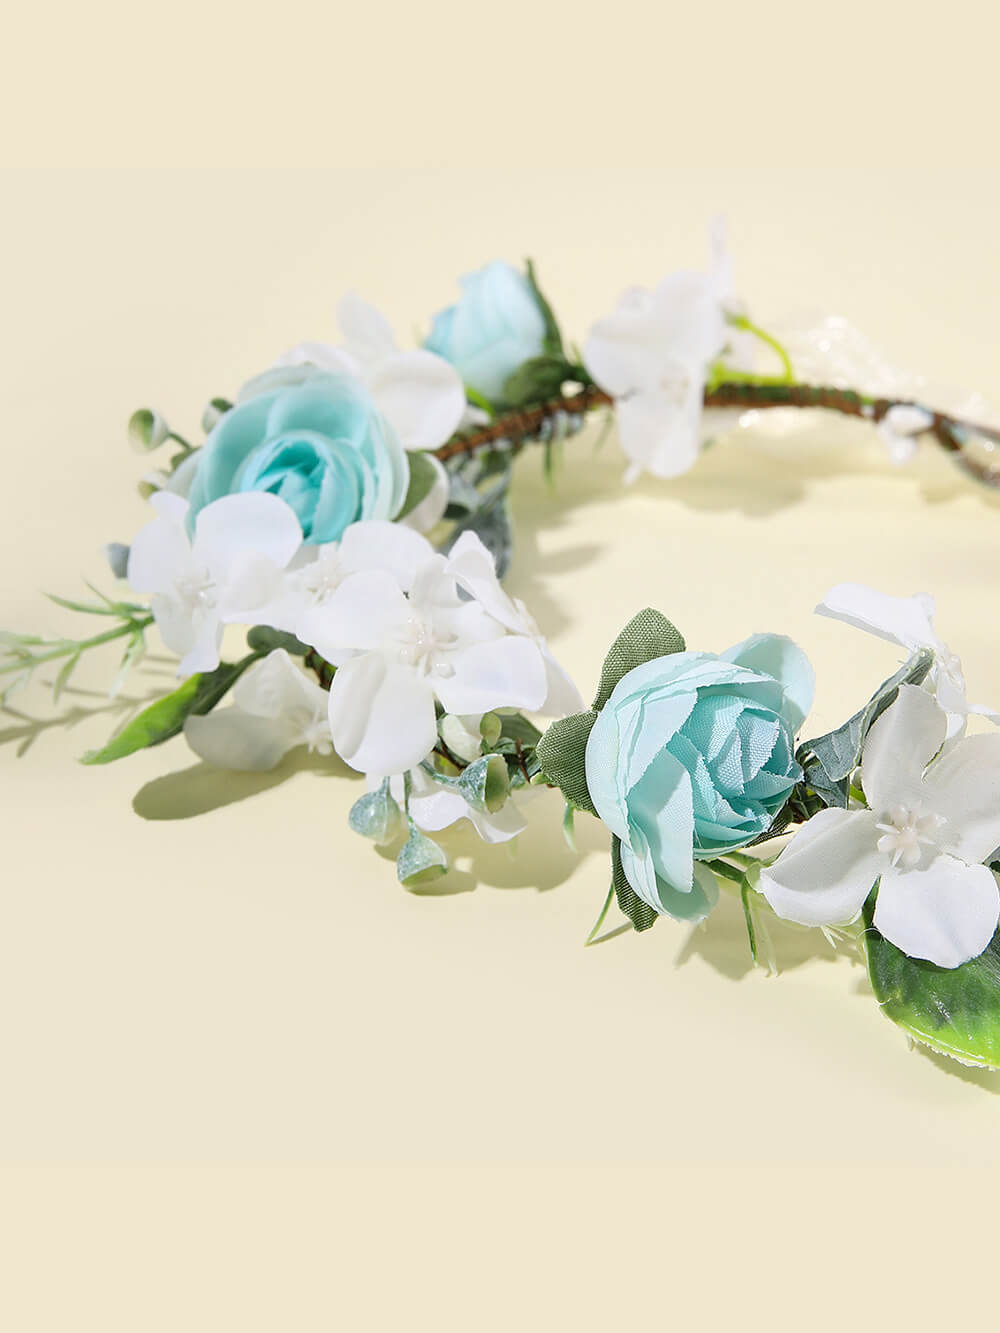 Bridal Flower Crown - White Verbena & Blue Roses Wreath